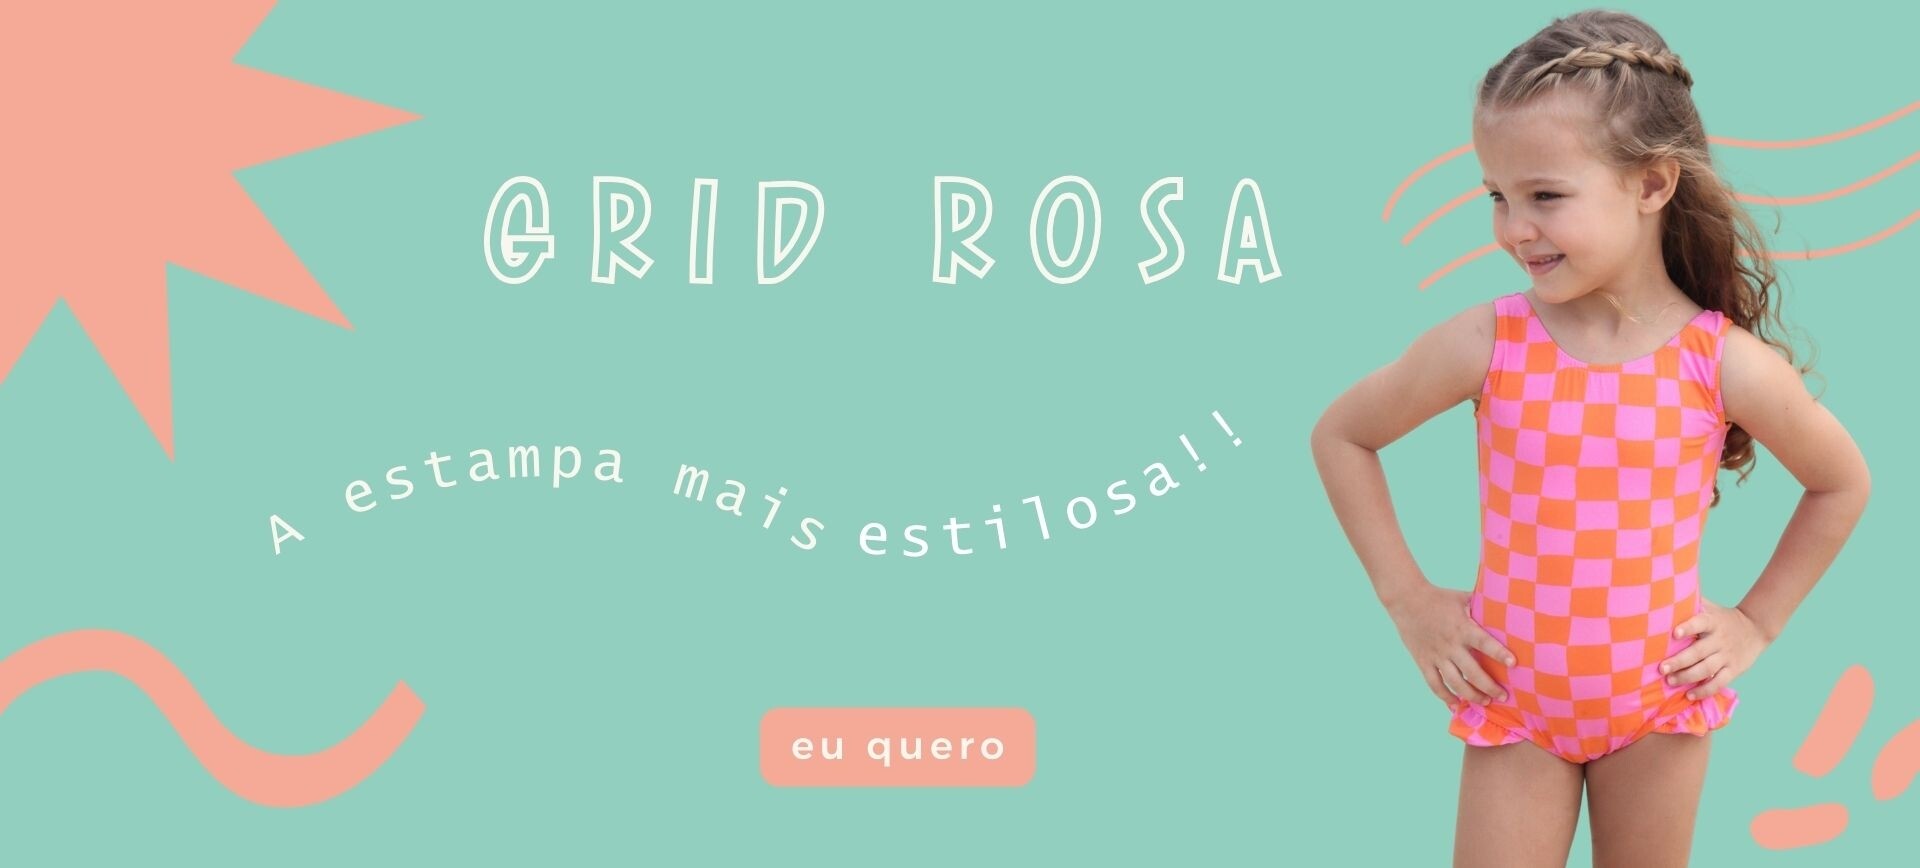 Grid Rosa